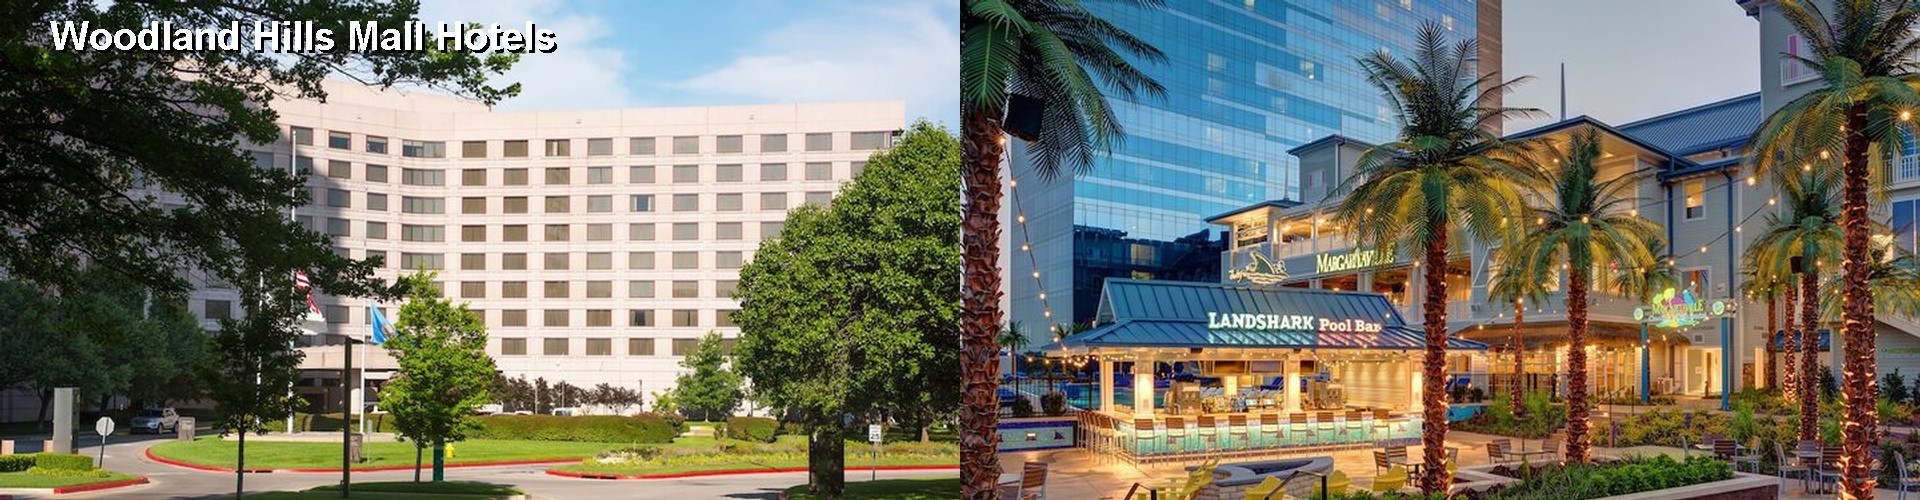 5 Best Hotels near Woodland Hills Mall